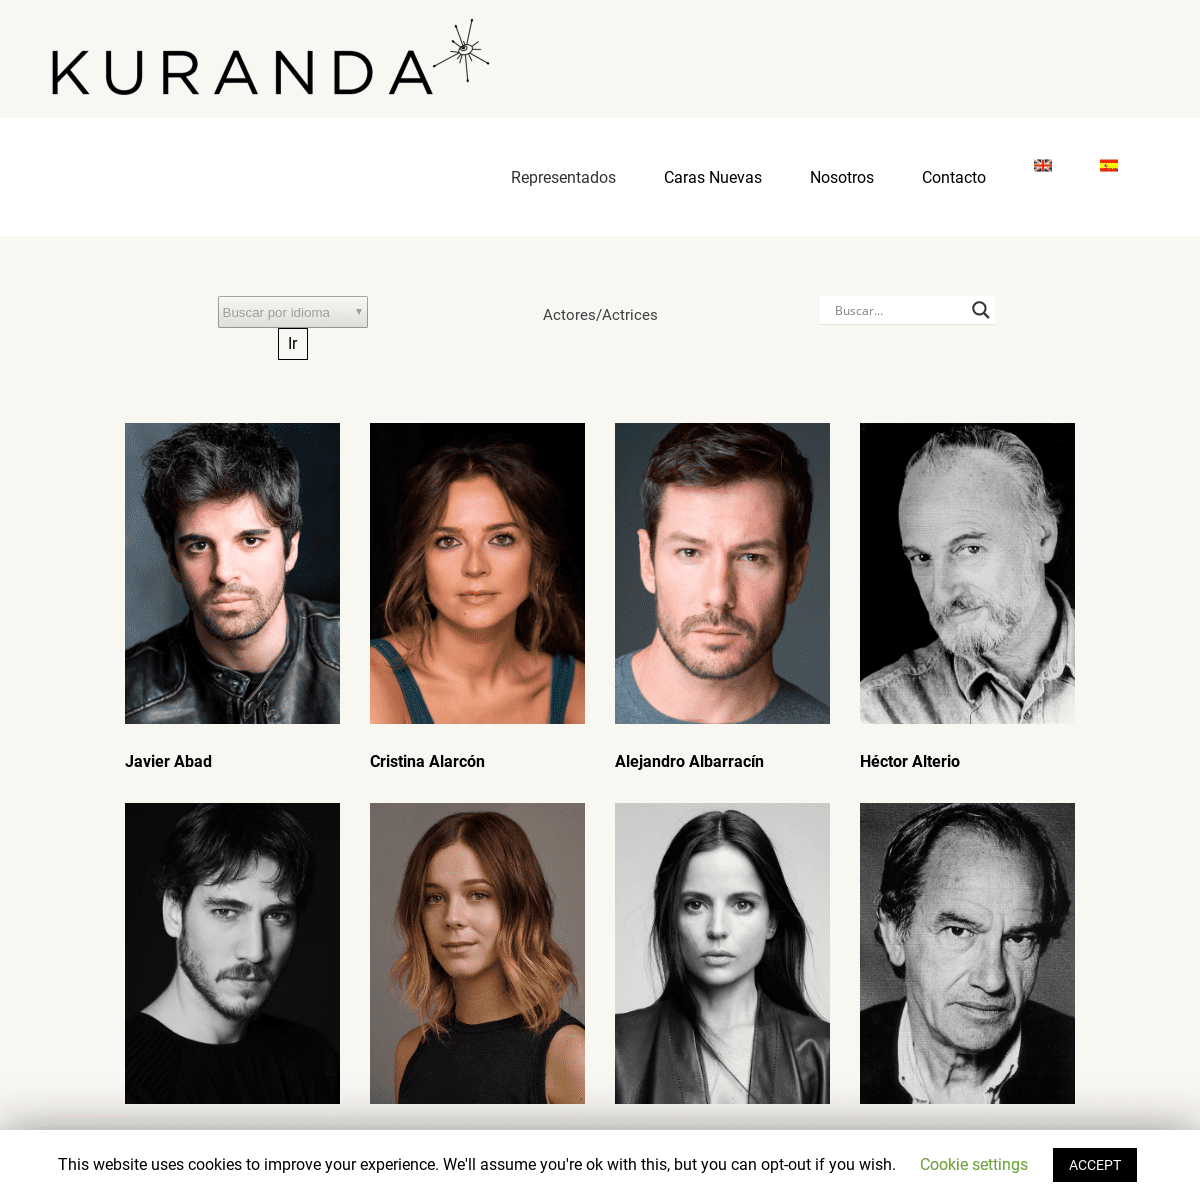 A complete backup of kurandaweb.com